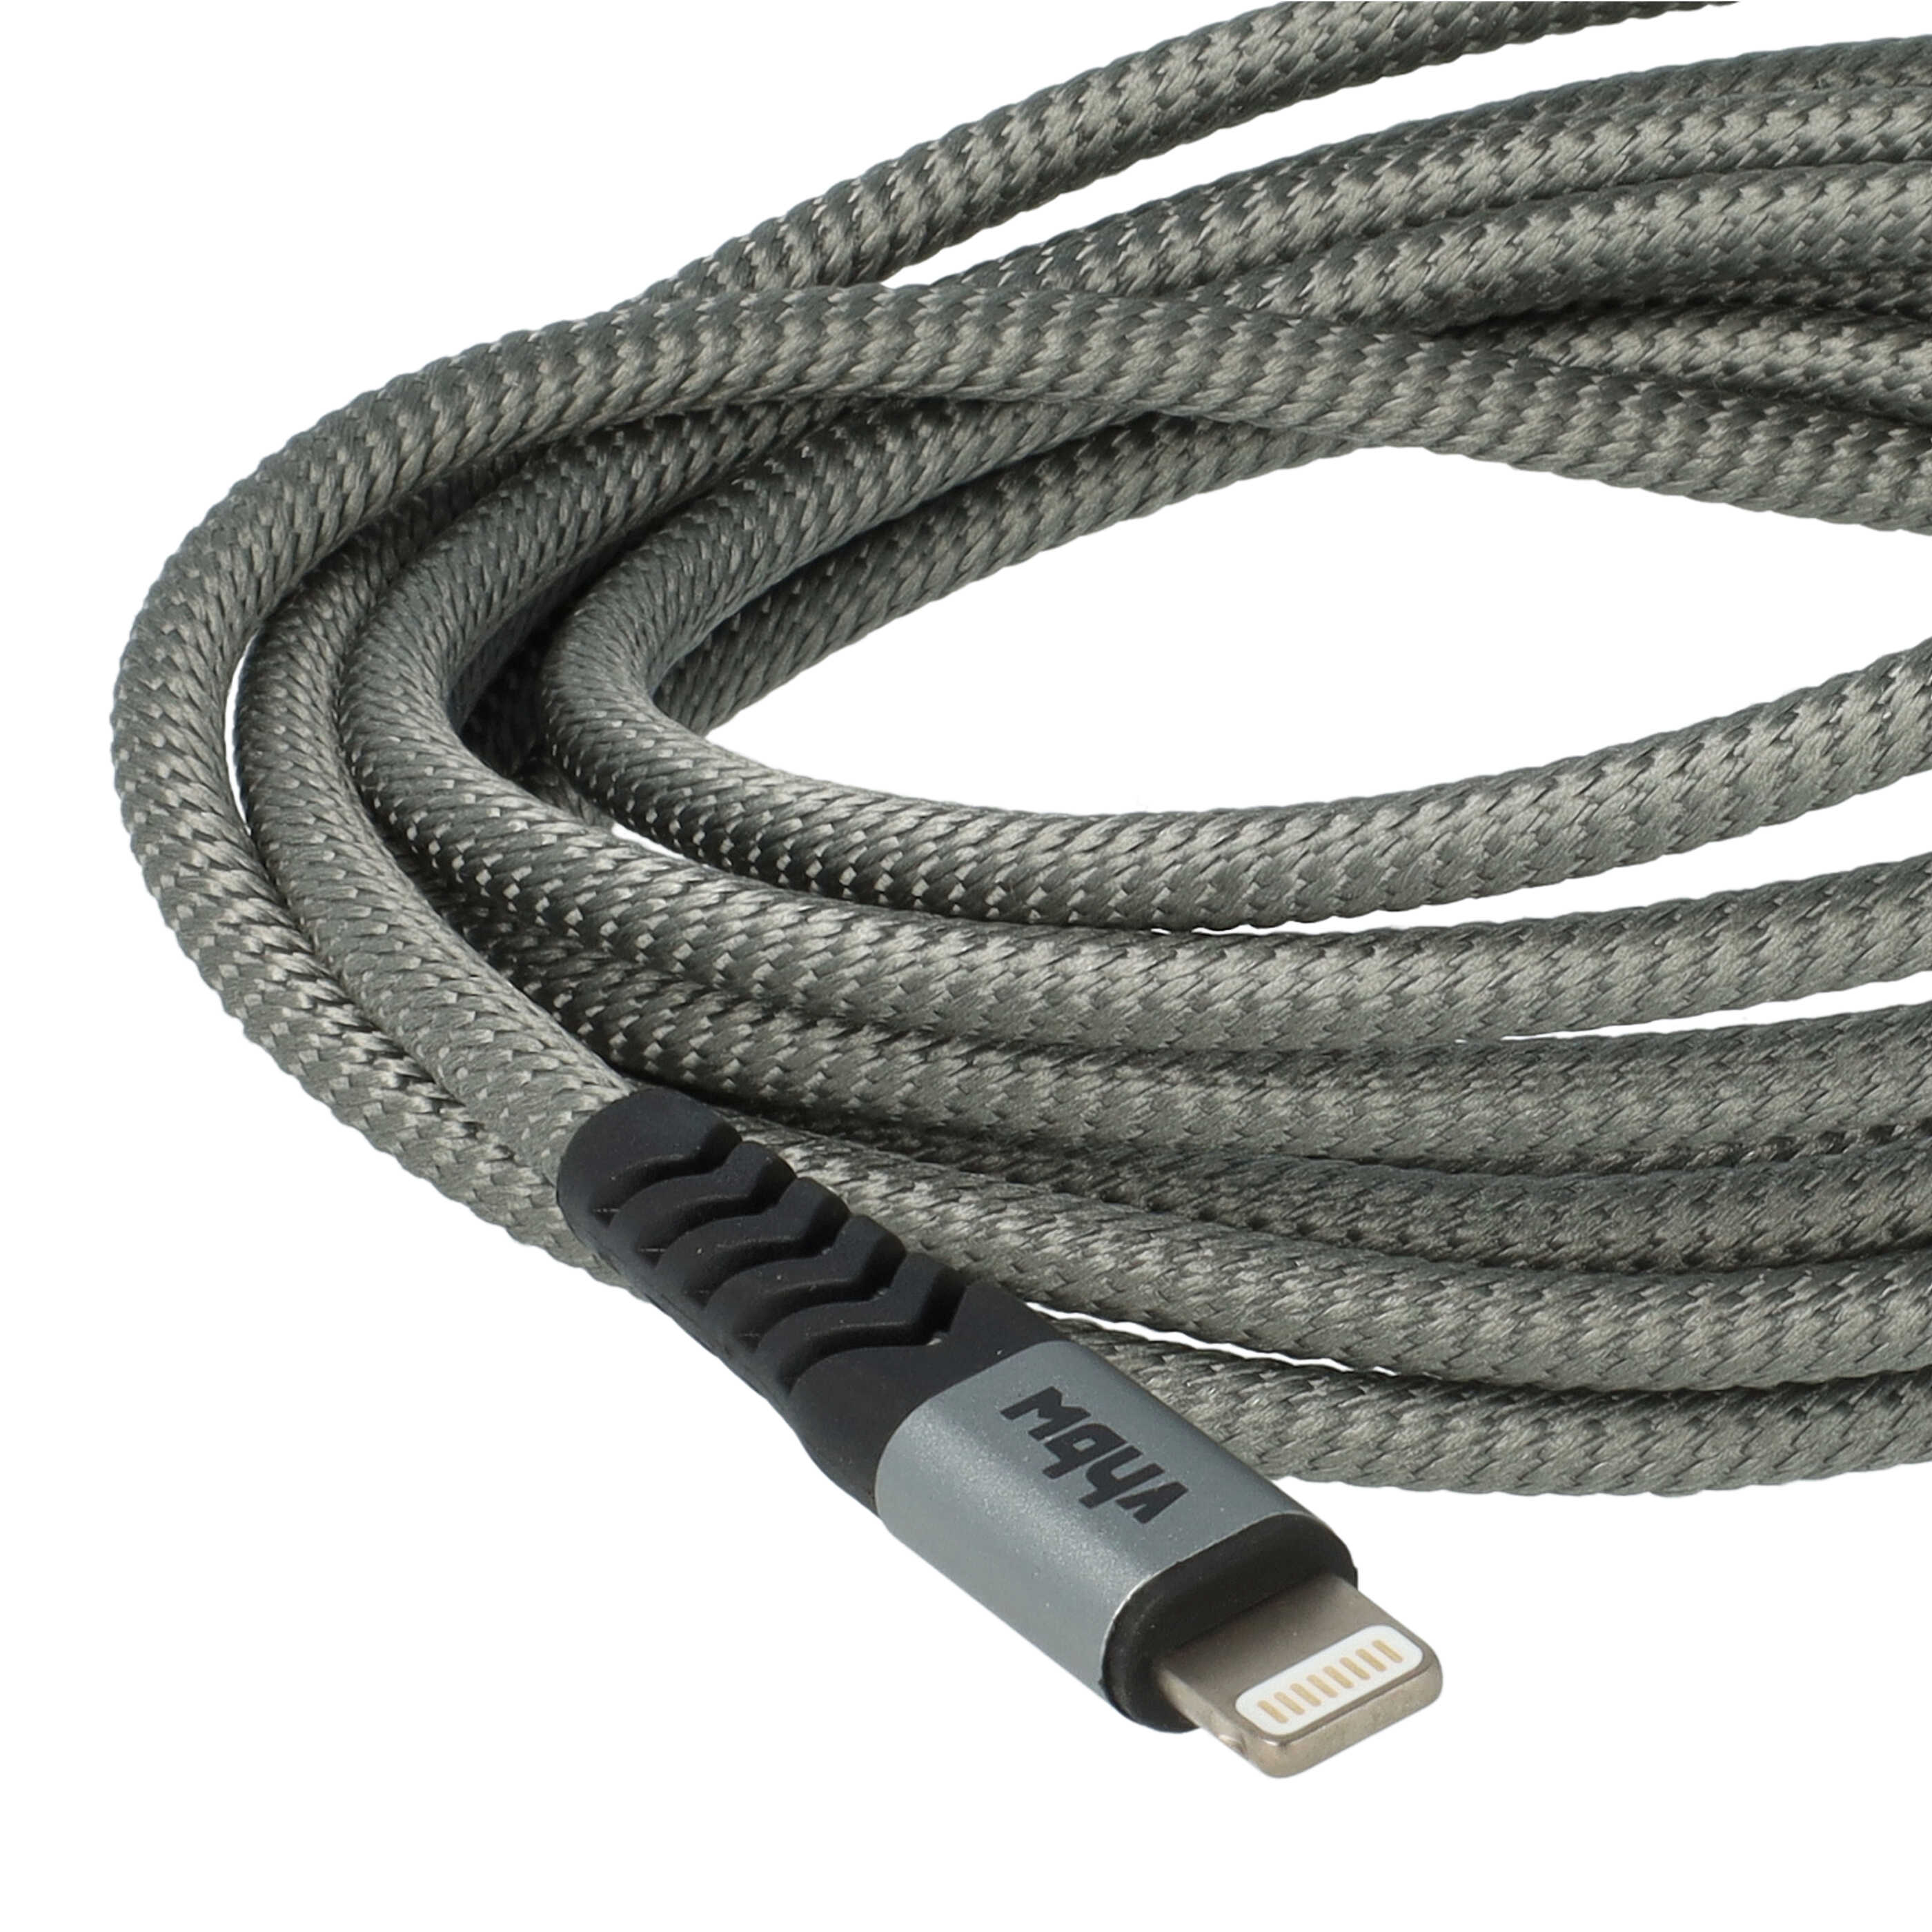 Cable lightning a USB A para dispositivos Apple iOS Apple AirPods - negro / gris, 180 cm